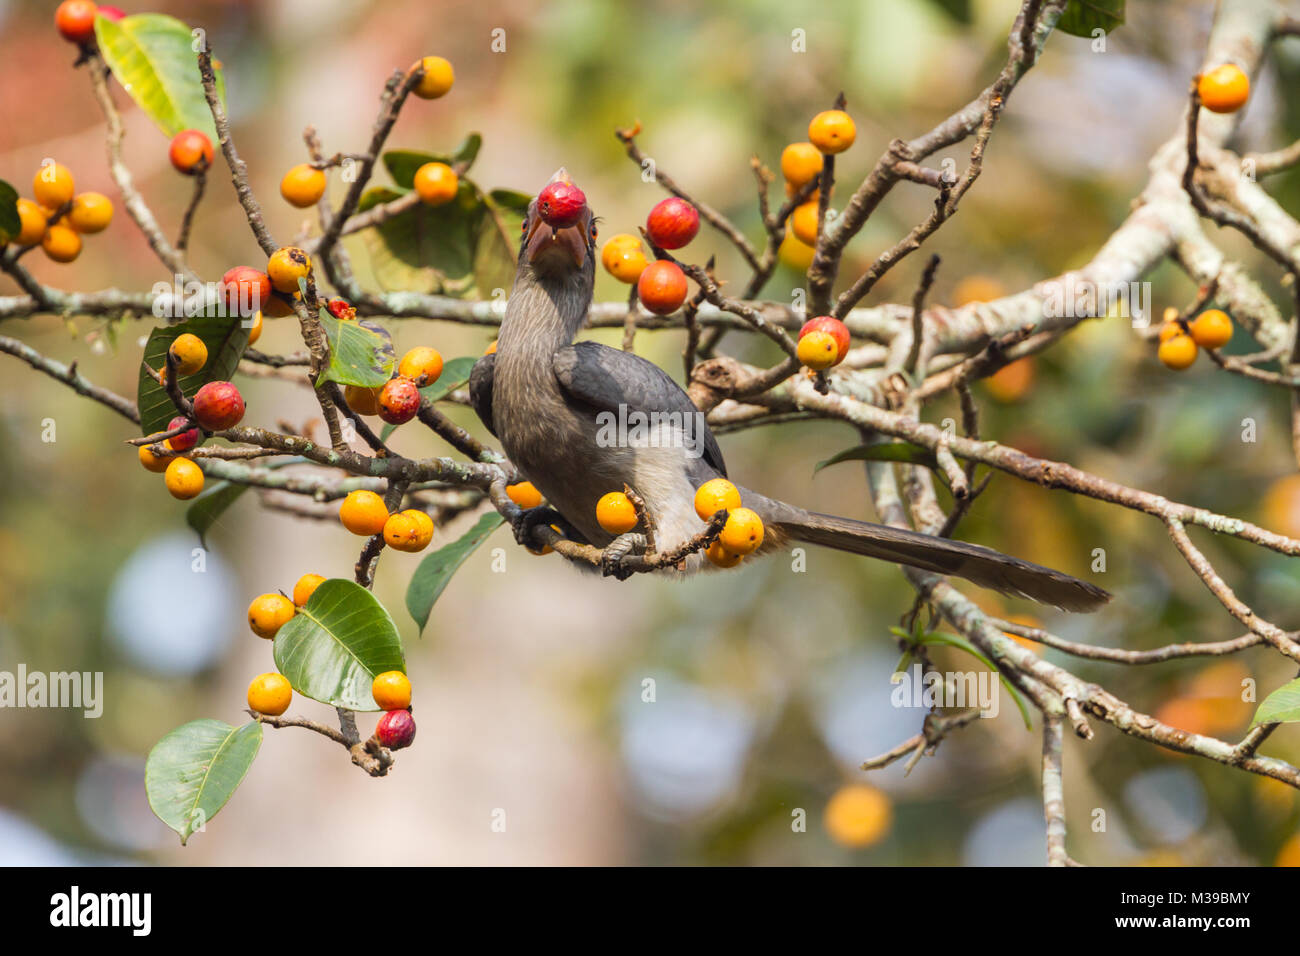 The Malabar grey hornbill (Ocyceros griseus) eating fruits at Timber Depot in Dandeli, Karnataka, India. Stock Photo